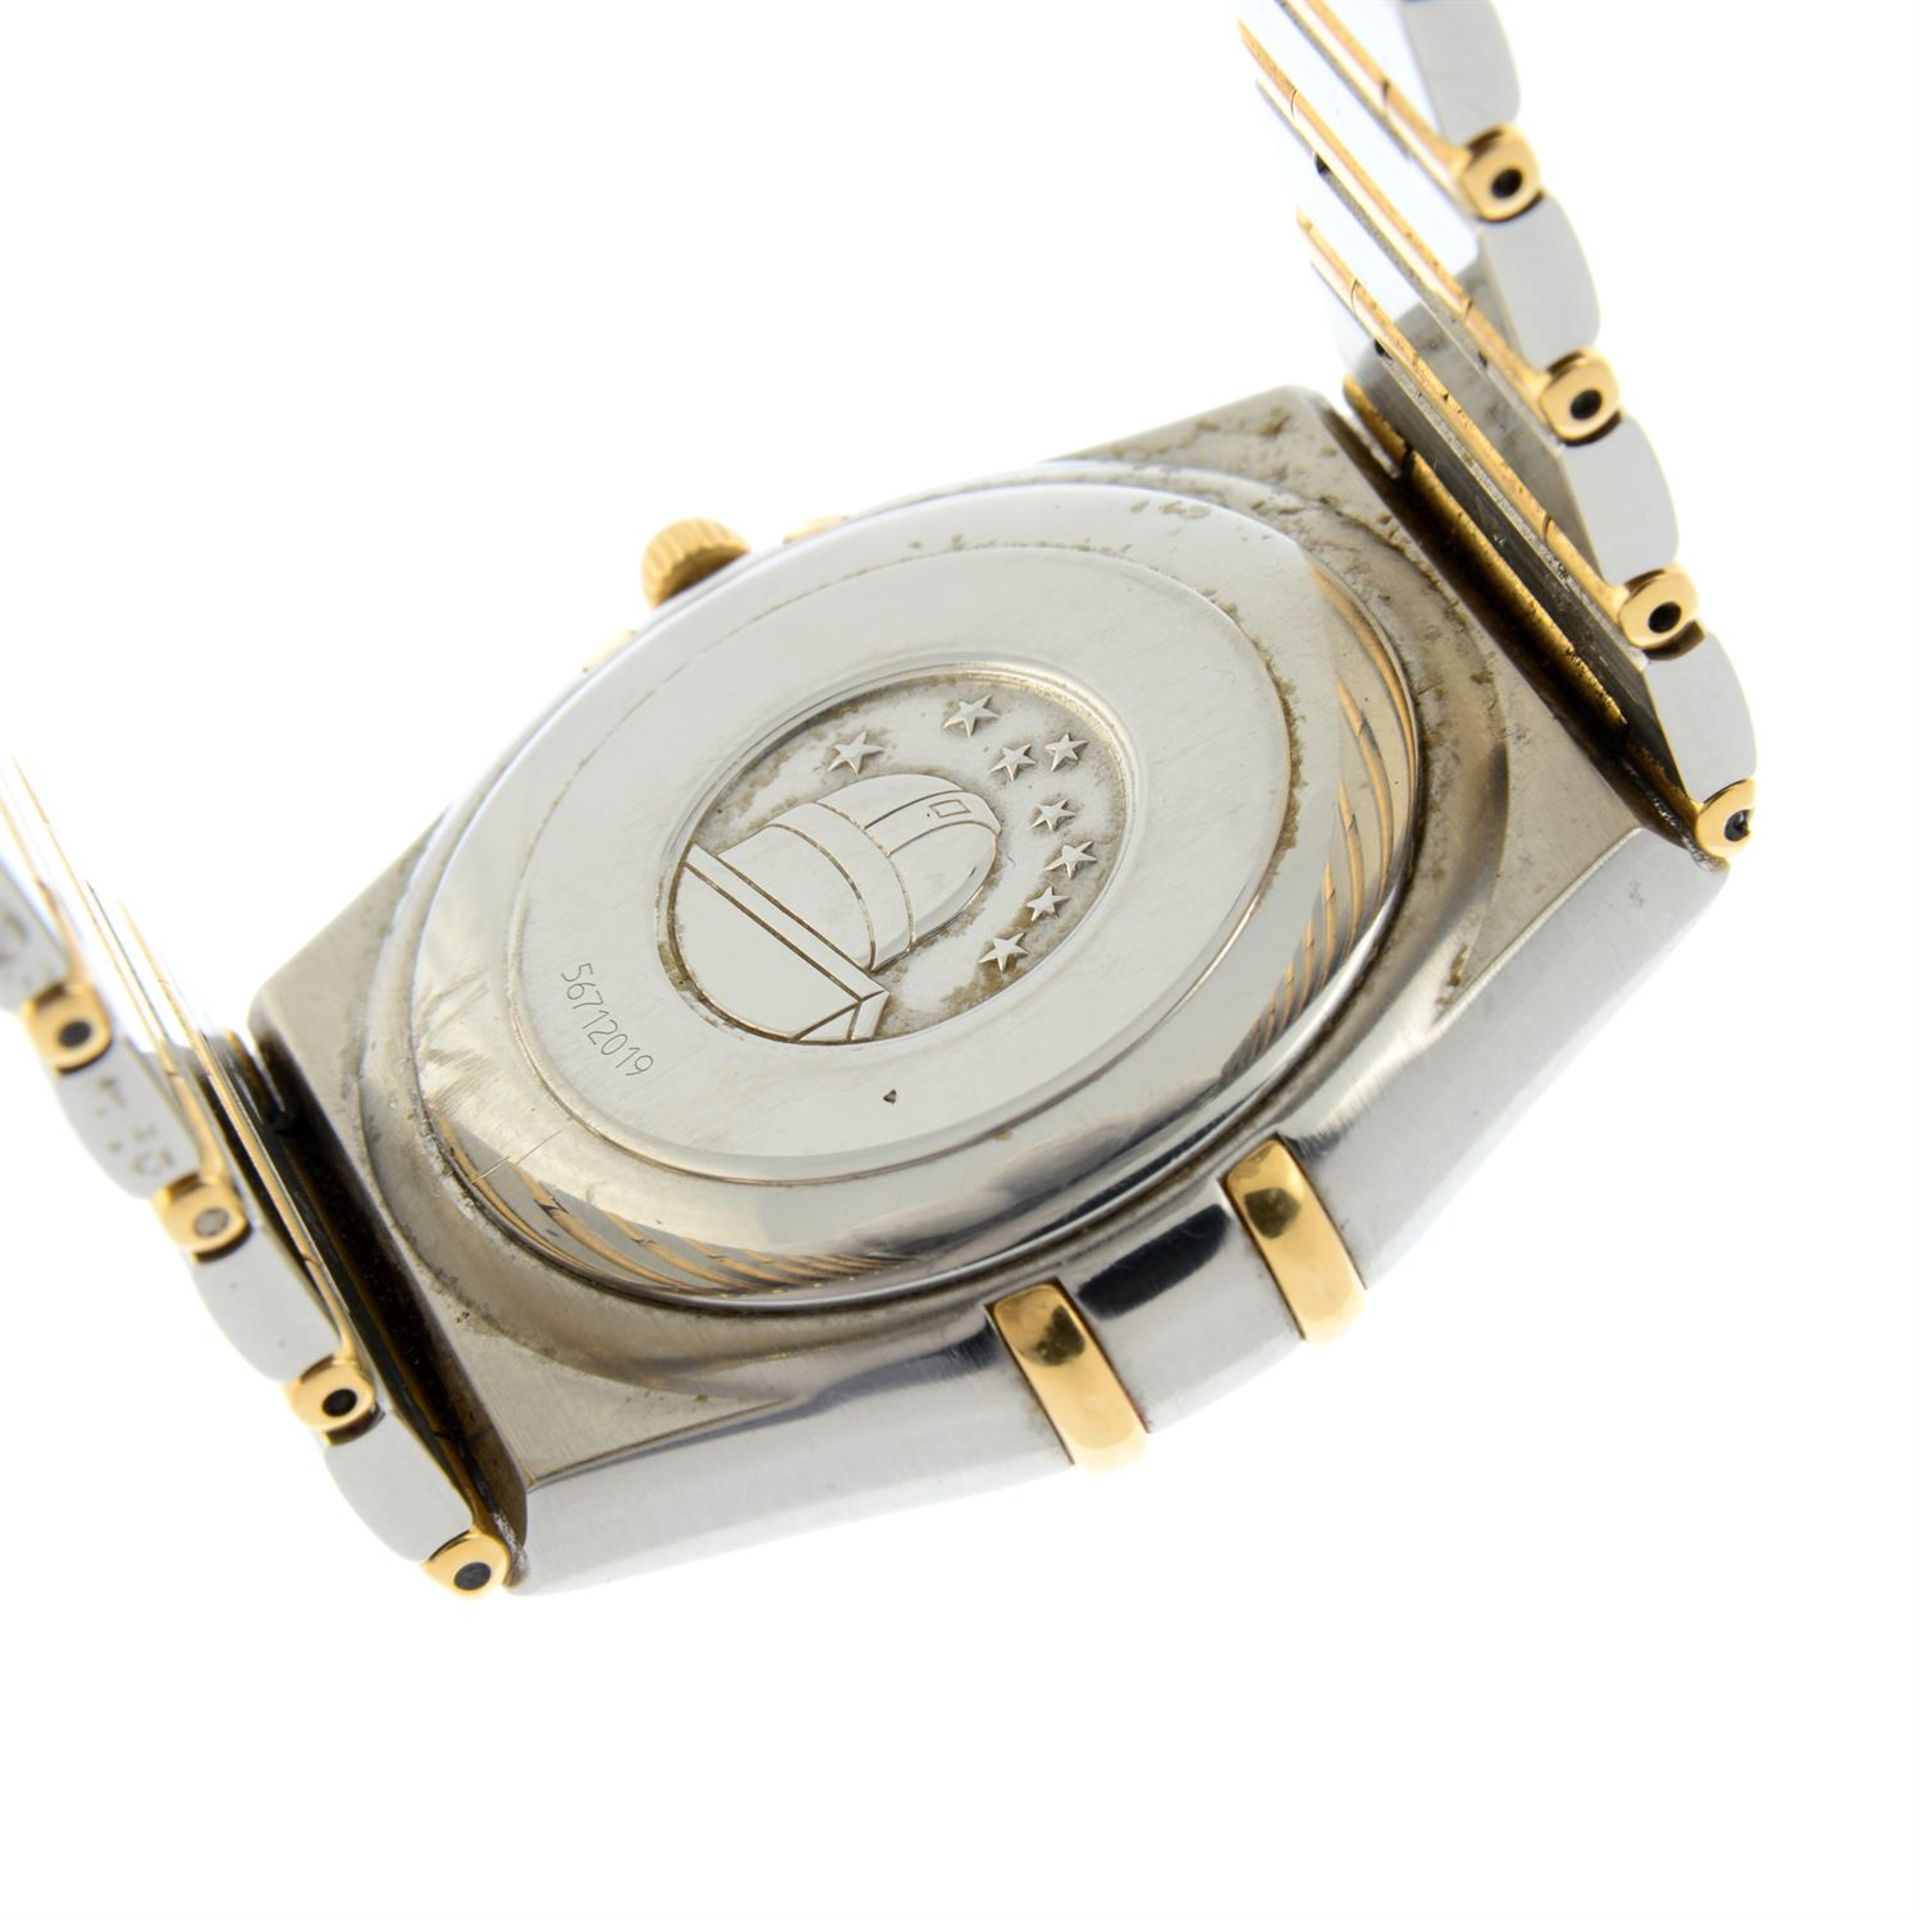 OMEGA - a bi-metal Constellation Calendar bracelet watch, 35mm. - Image 4 of 6